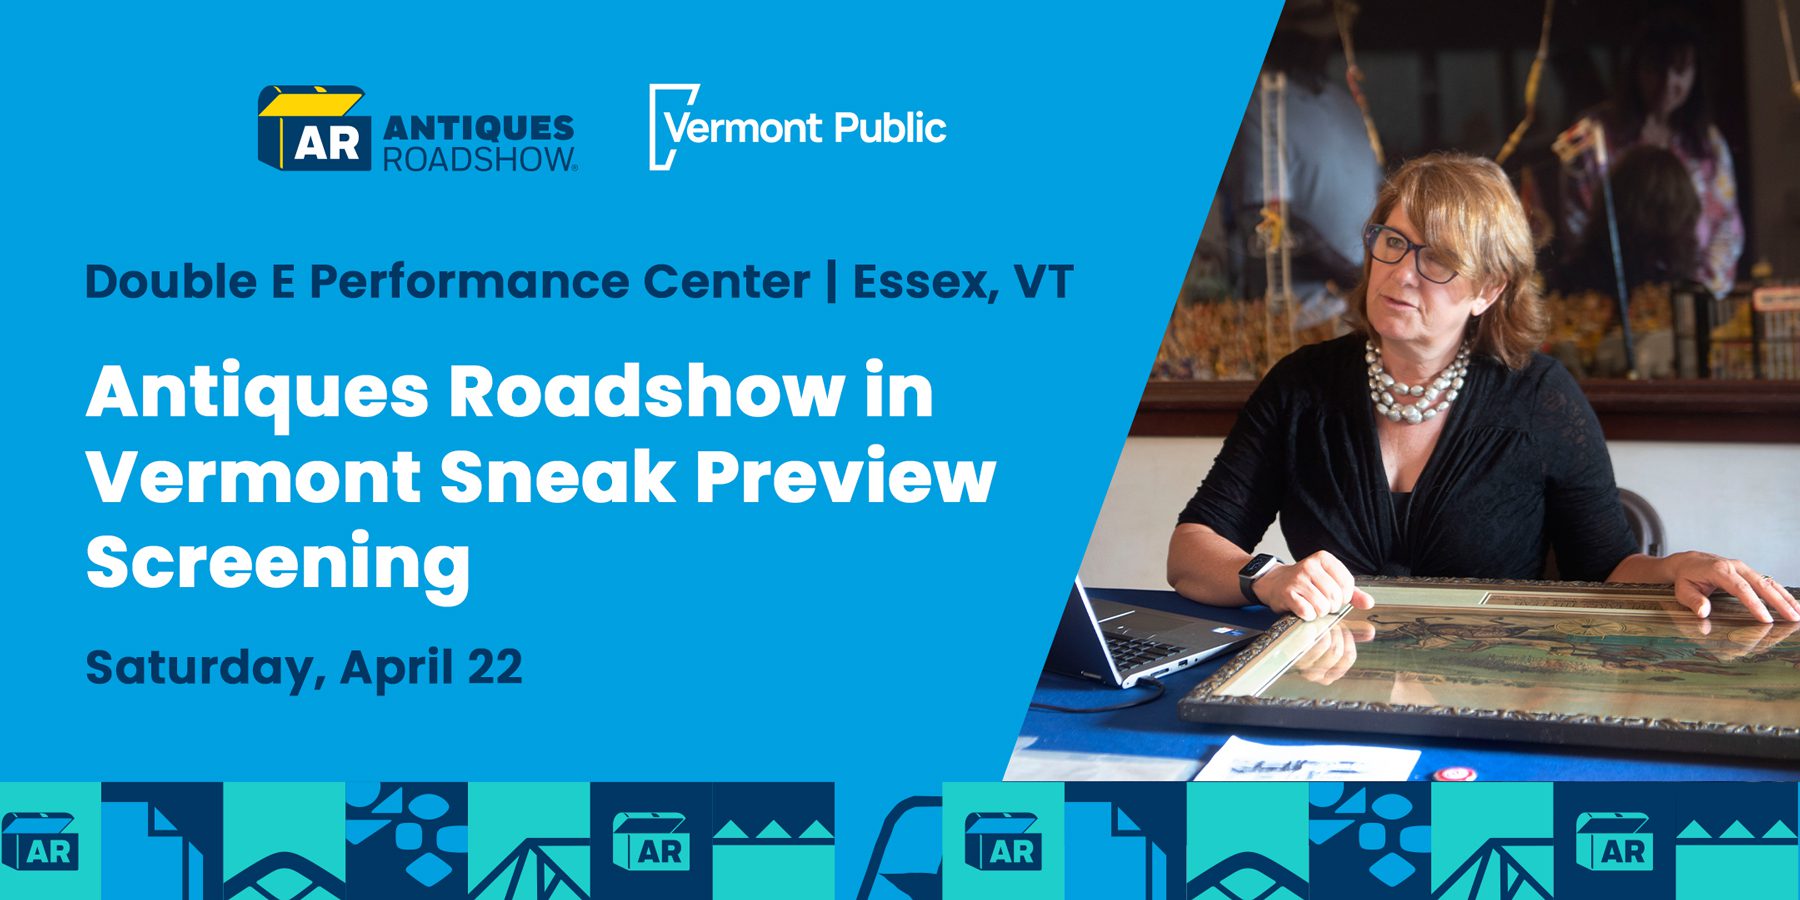 Antiques Roadshow in Vermont Sneak Preview – Essex Junction